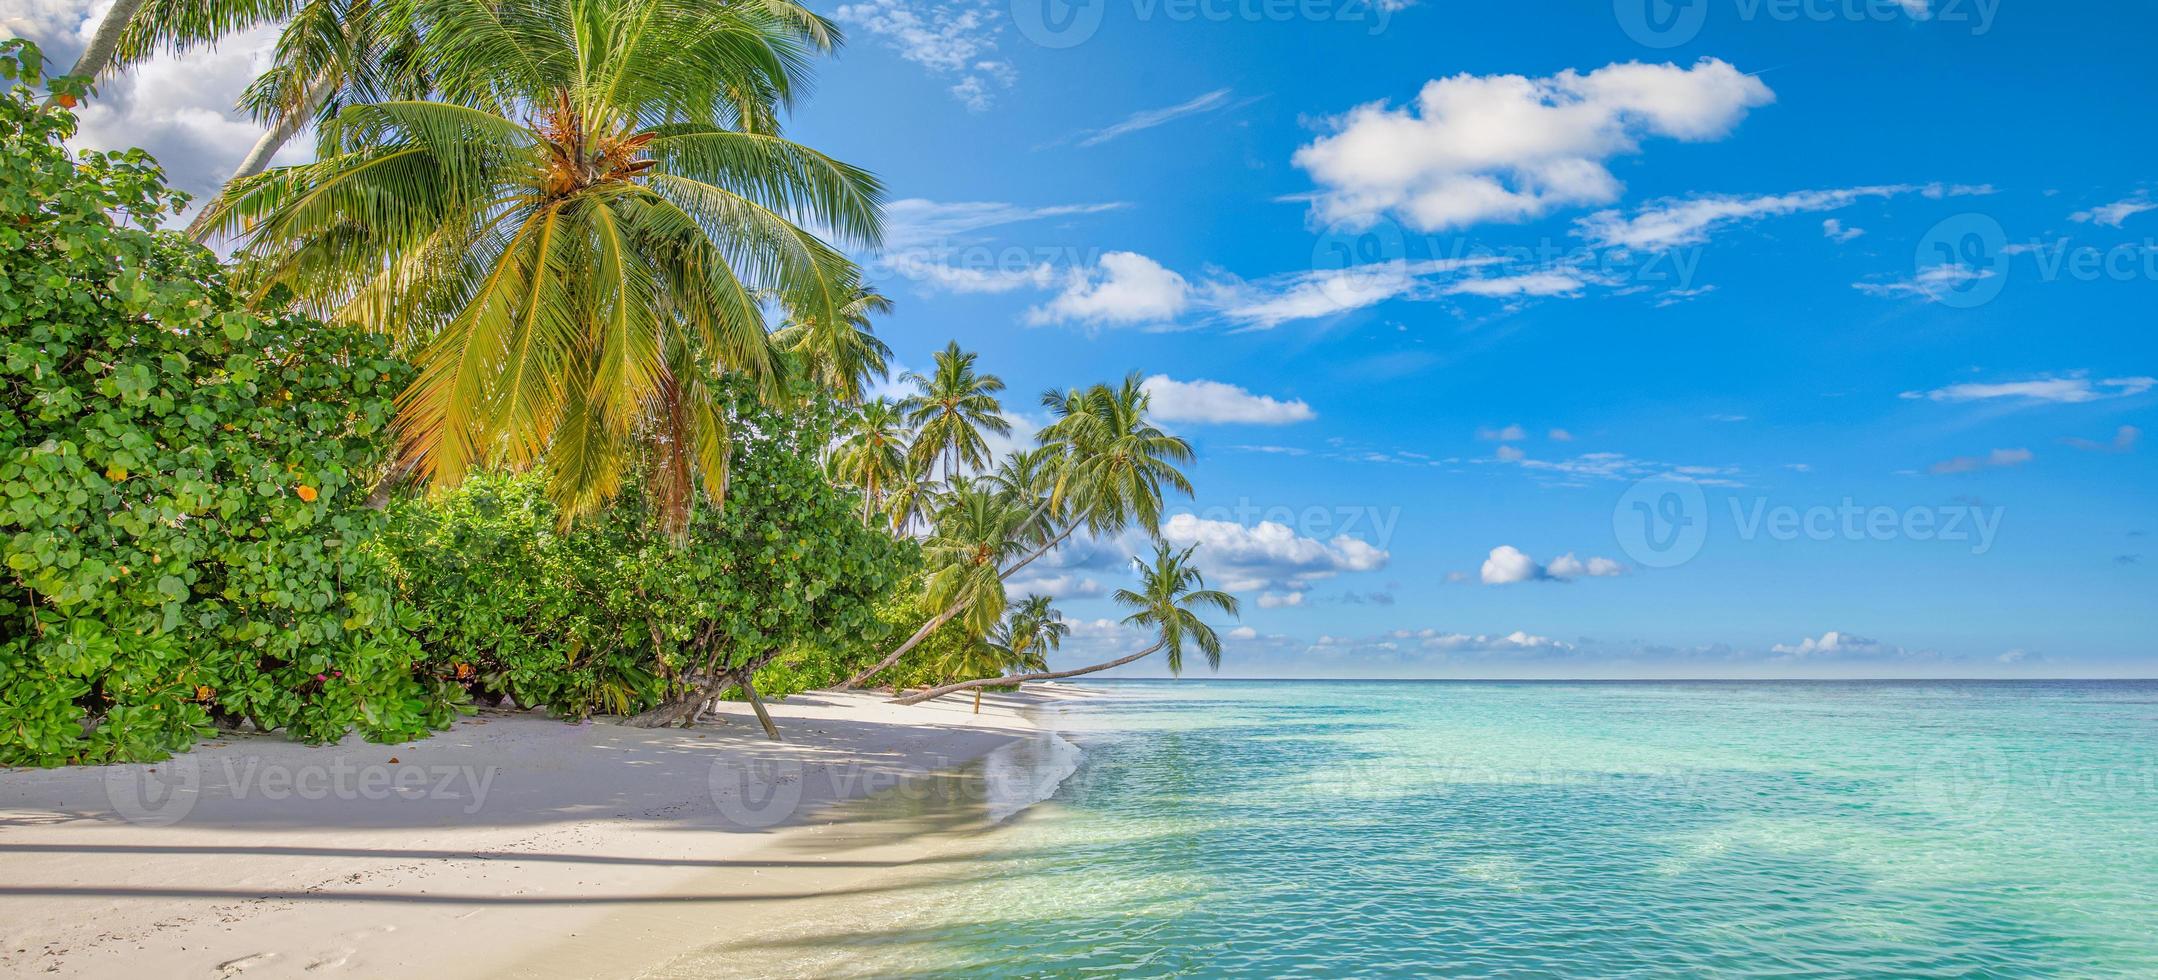 sommar resa bakgrund. exotisk tropisk strand ö, paradis kust. handflatan träd vit sand, Fantastisk himmel hav lagun. fantastisk skön natur panorama, solig dag idyllisk inspirera semester foto